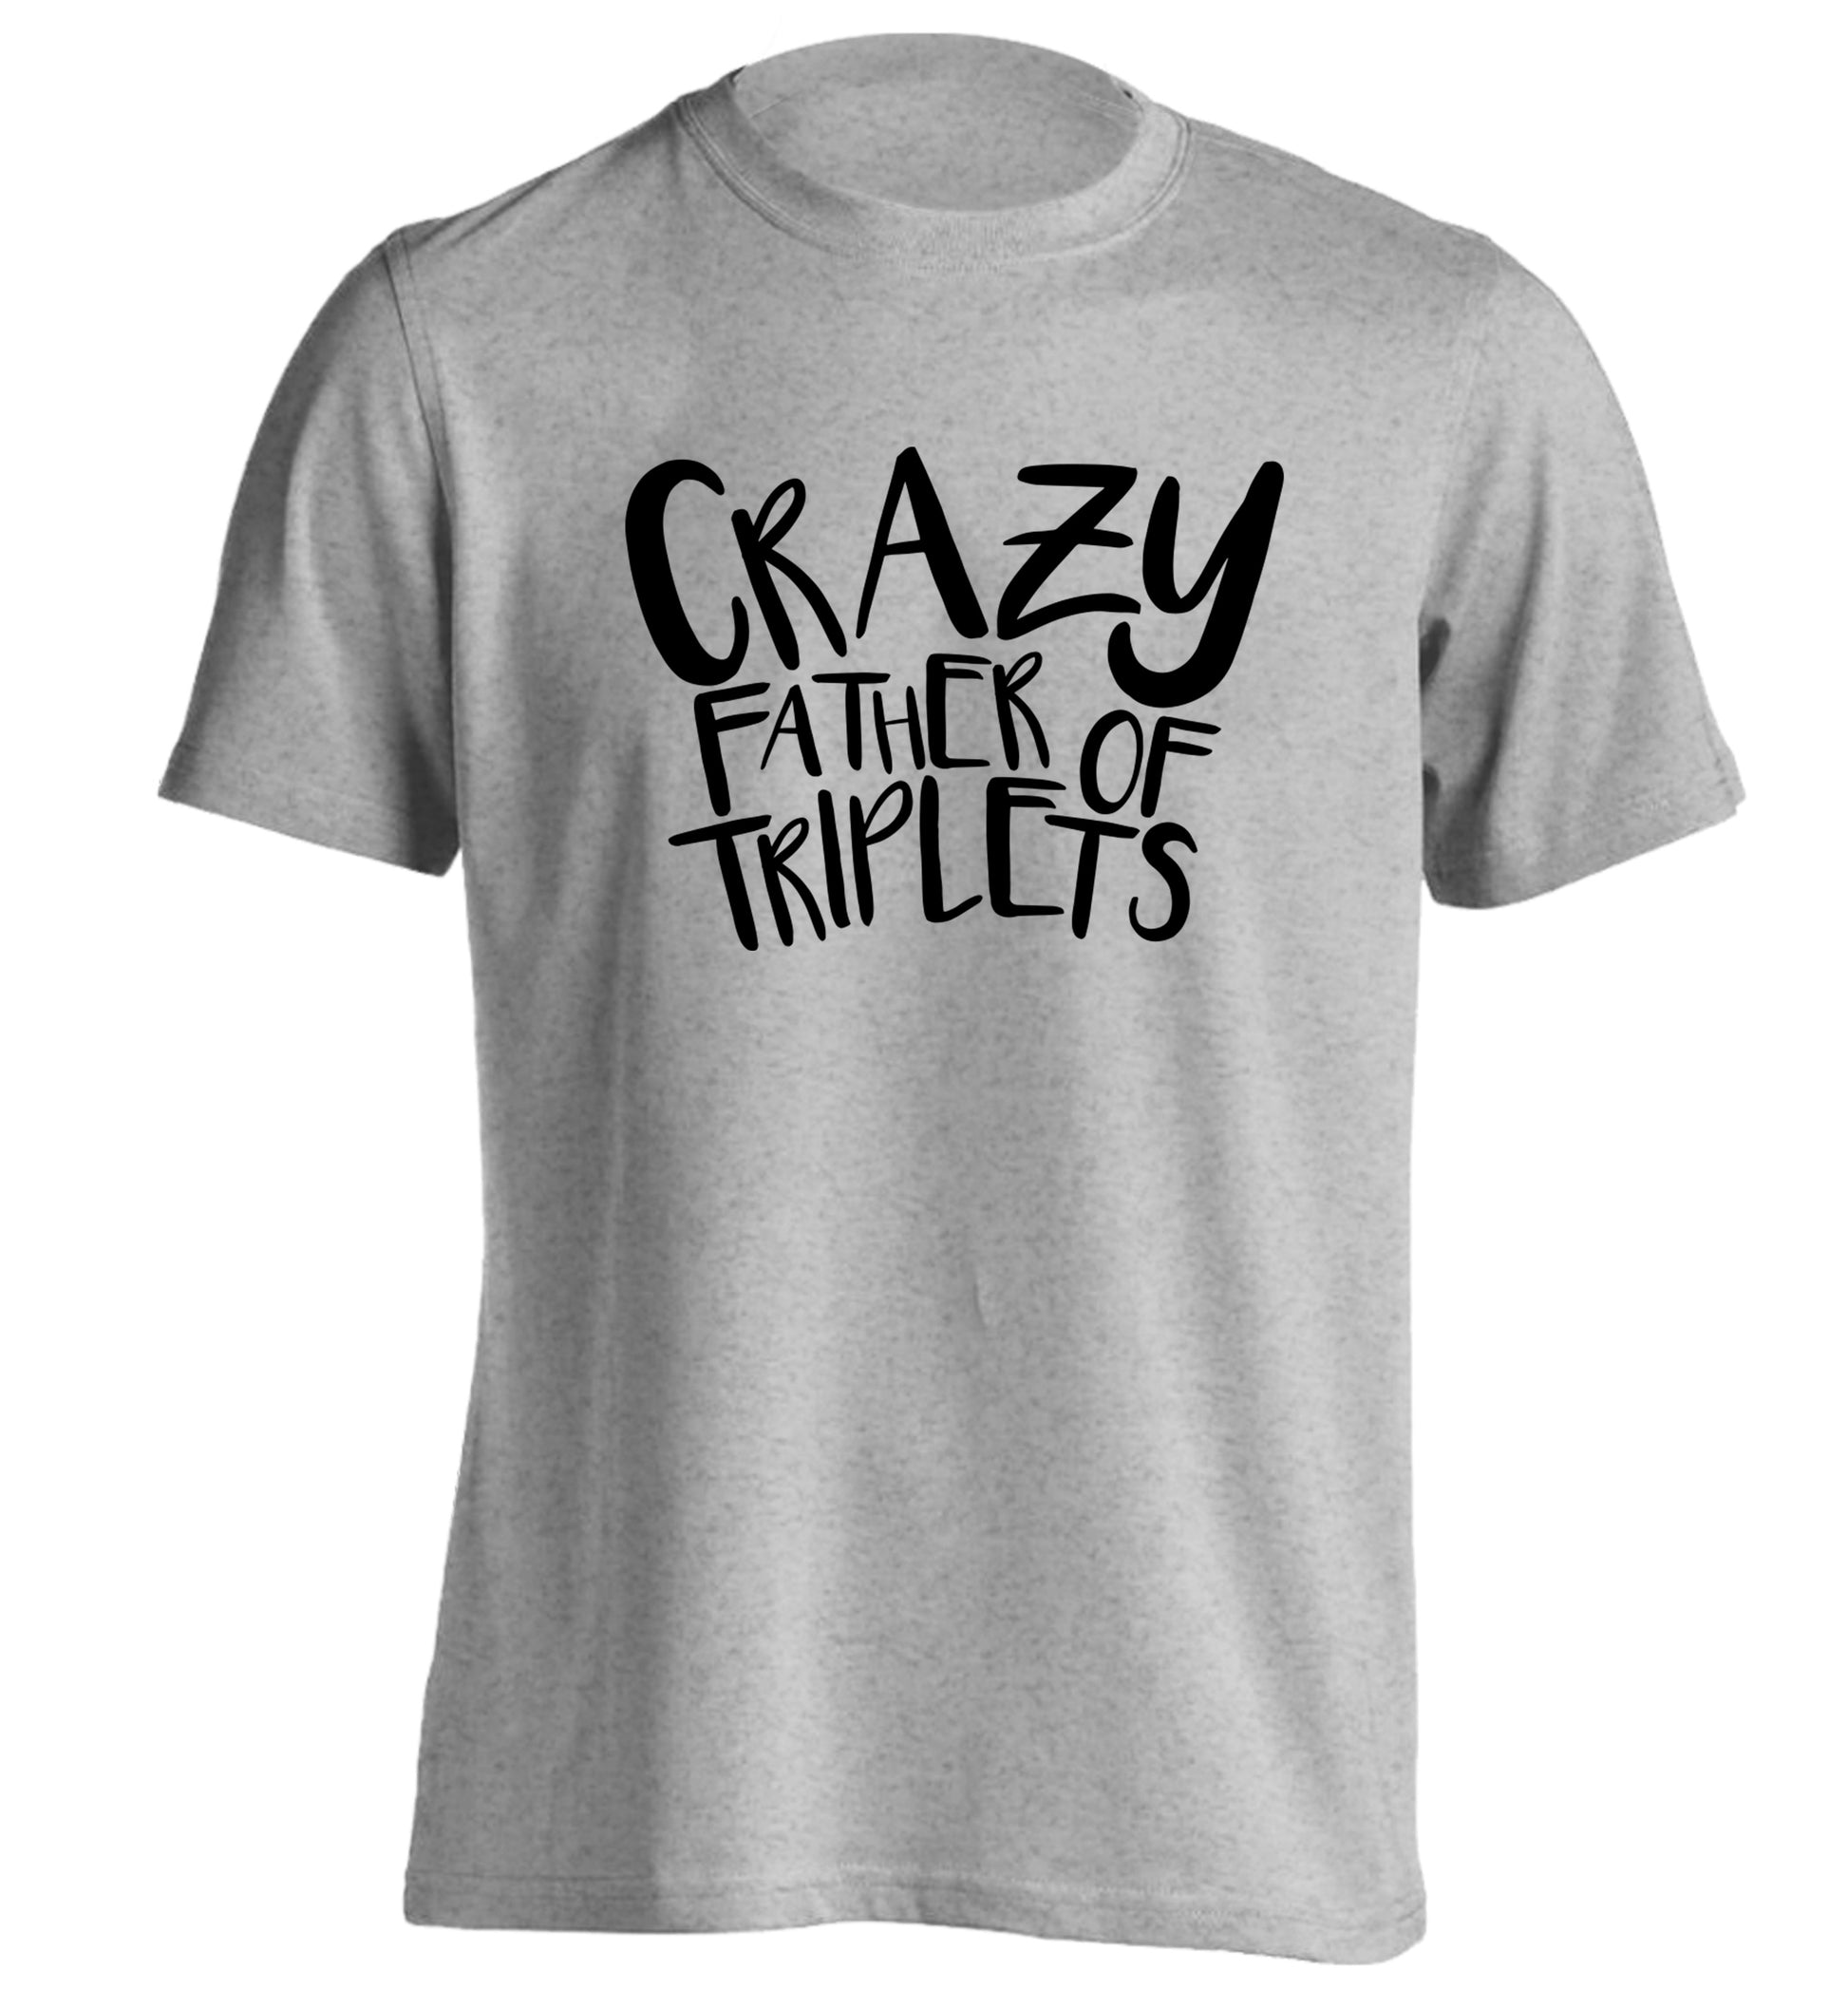 Crazy father of triplets adults unisex grey Tshirt 2XL